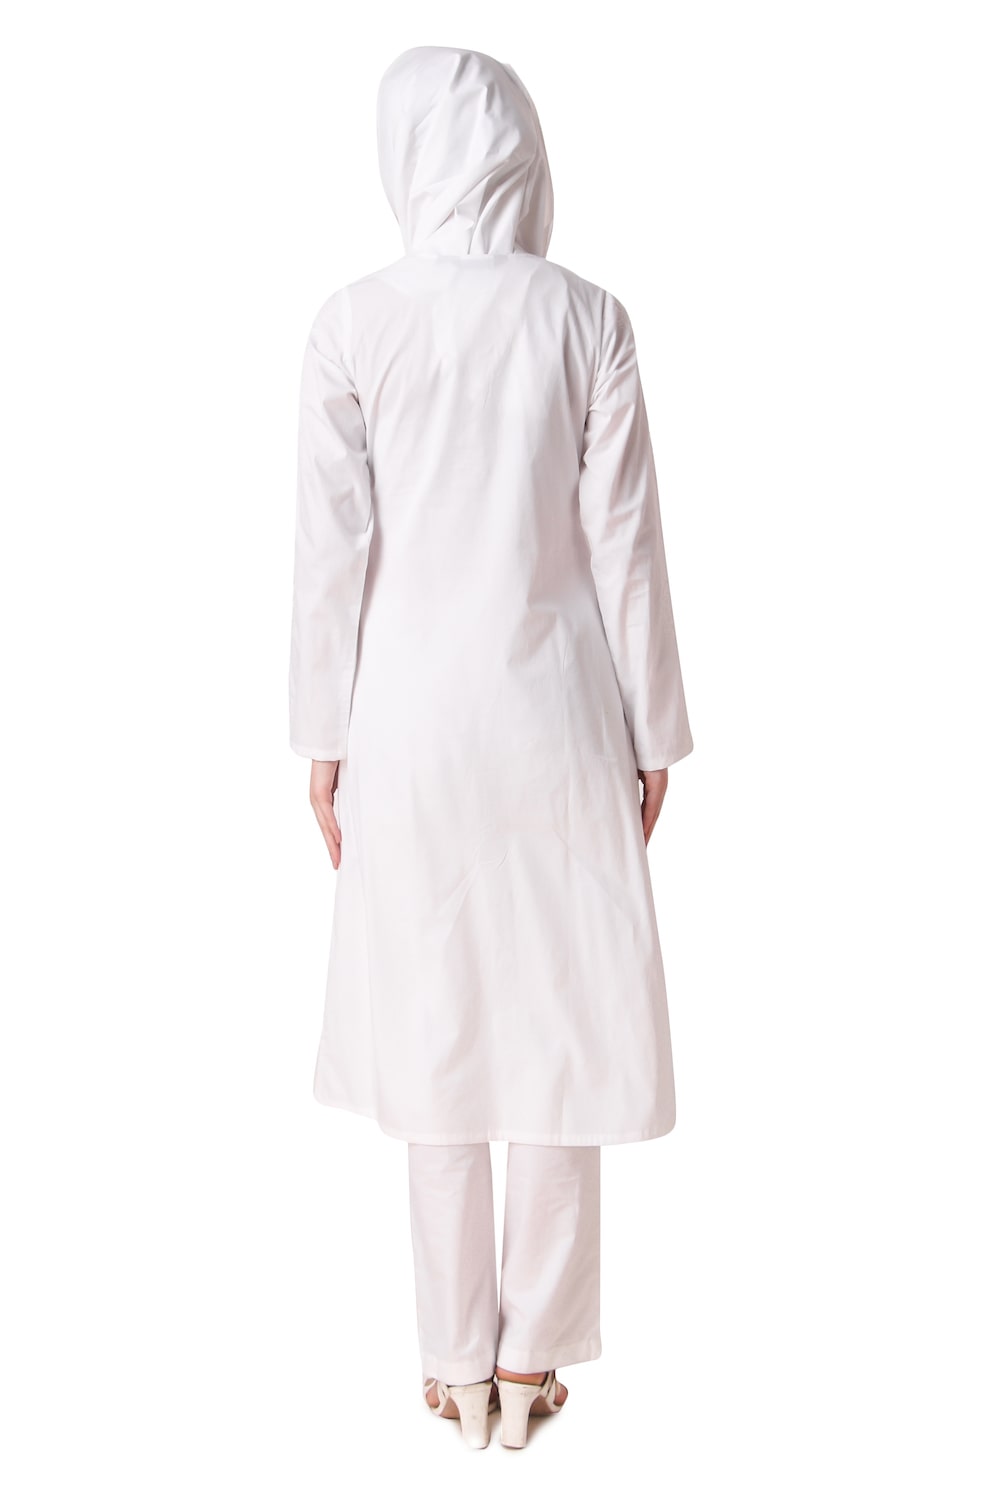 Huma White Front Open Cotton Salwar Kameez